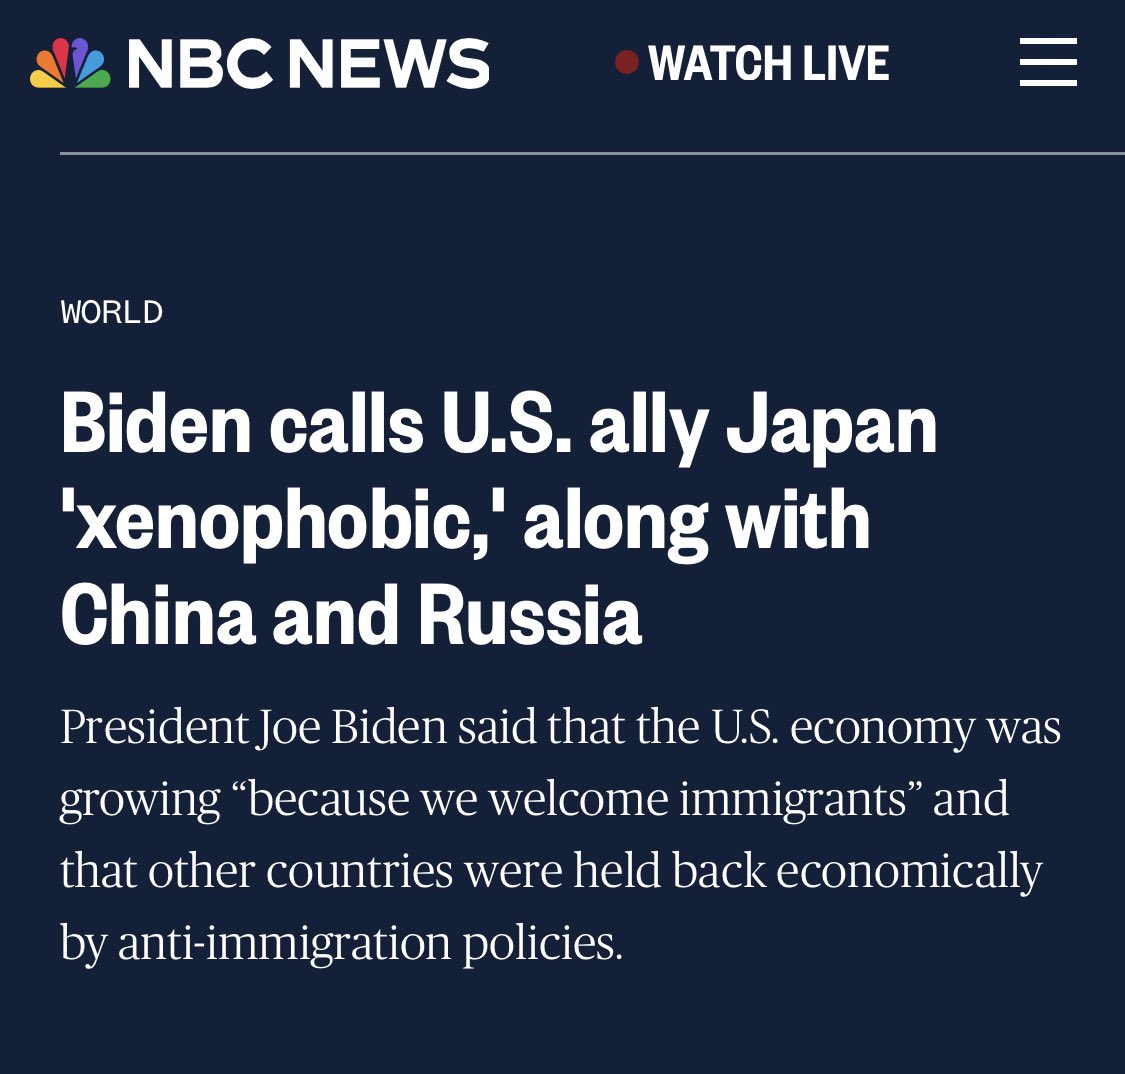 Joe Biden  บอกประเทศญี่ปุ่นว่าเป็นประเทศที่เหยียดคนต่างชาติ เหมือนจีน/รัสเซีย และเป็นเหตุผลที่เศรษฐกิจตกต่ำ
ทำไมจีนถึงจมอยู่กับเศรษฐกิจที่ย่ำแย่? เช่นเดียวกับญี่ปุ่นและรัสเซีย เพราะว่าพวกเขาเหยียดคนต่างชาติ พวกเขาไม่ต้องการผู้อพยพ
คงเบลอจัดจนลืมไปว่าญี่ปุ่นนี่โคตรพันธมิตรเมกาแล้ว